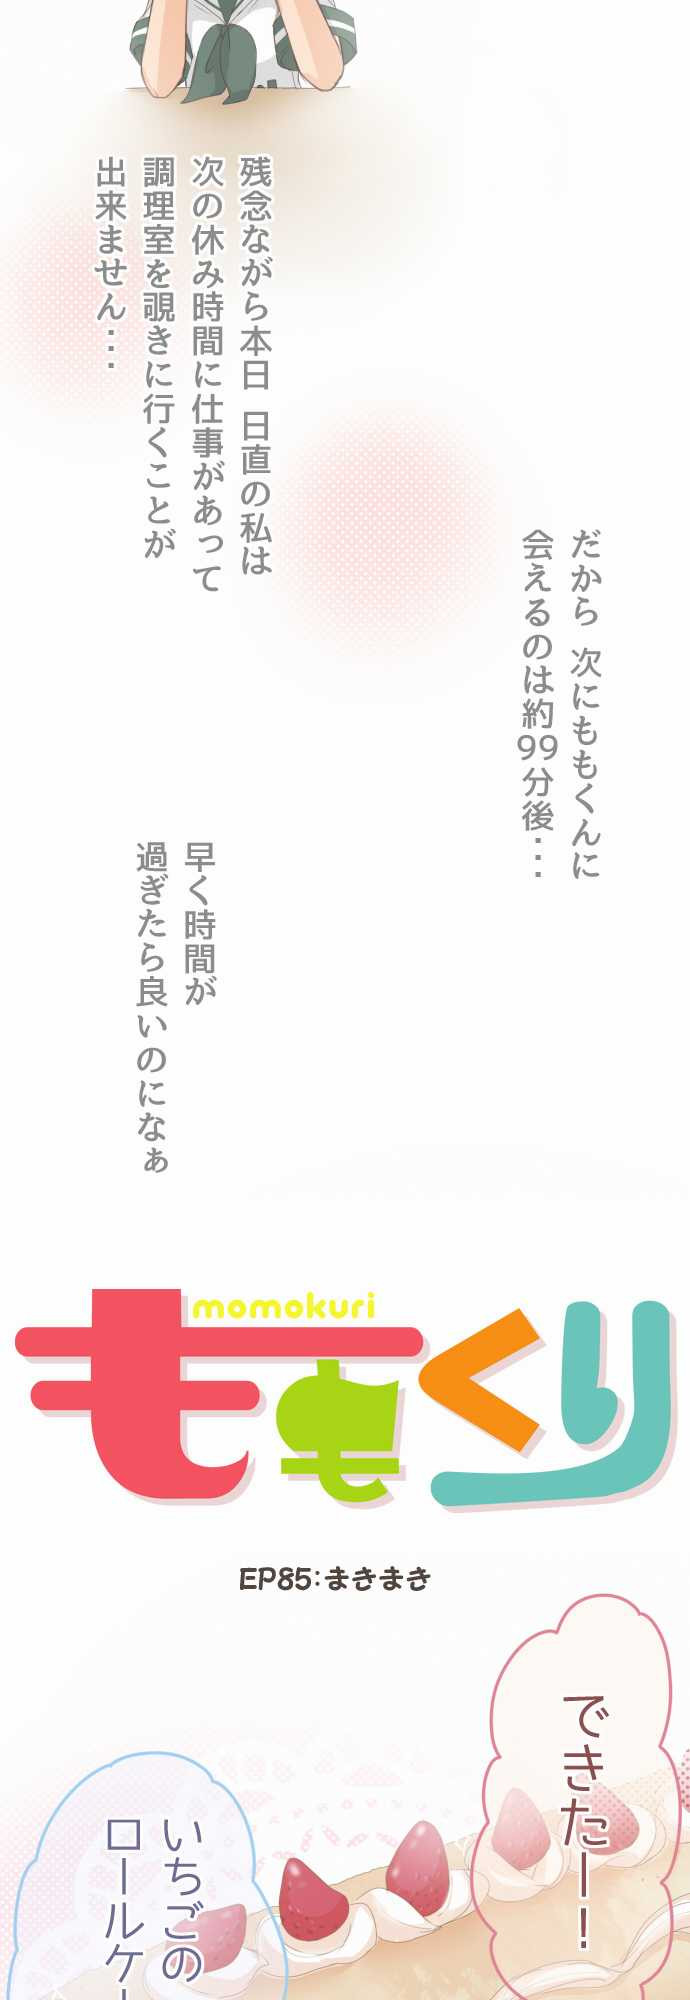 Momokuri - Chapter 085 - Page 2